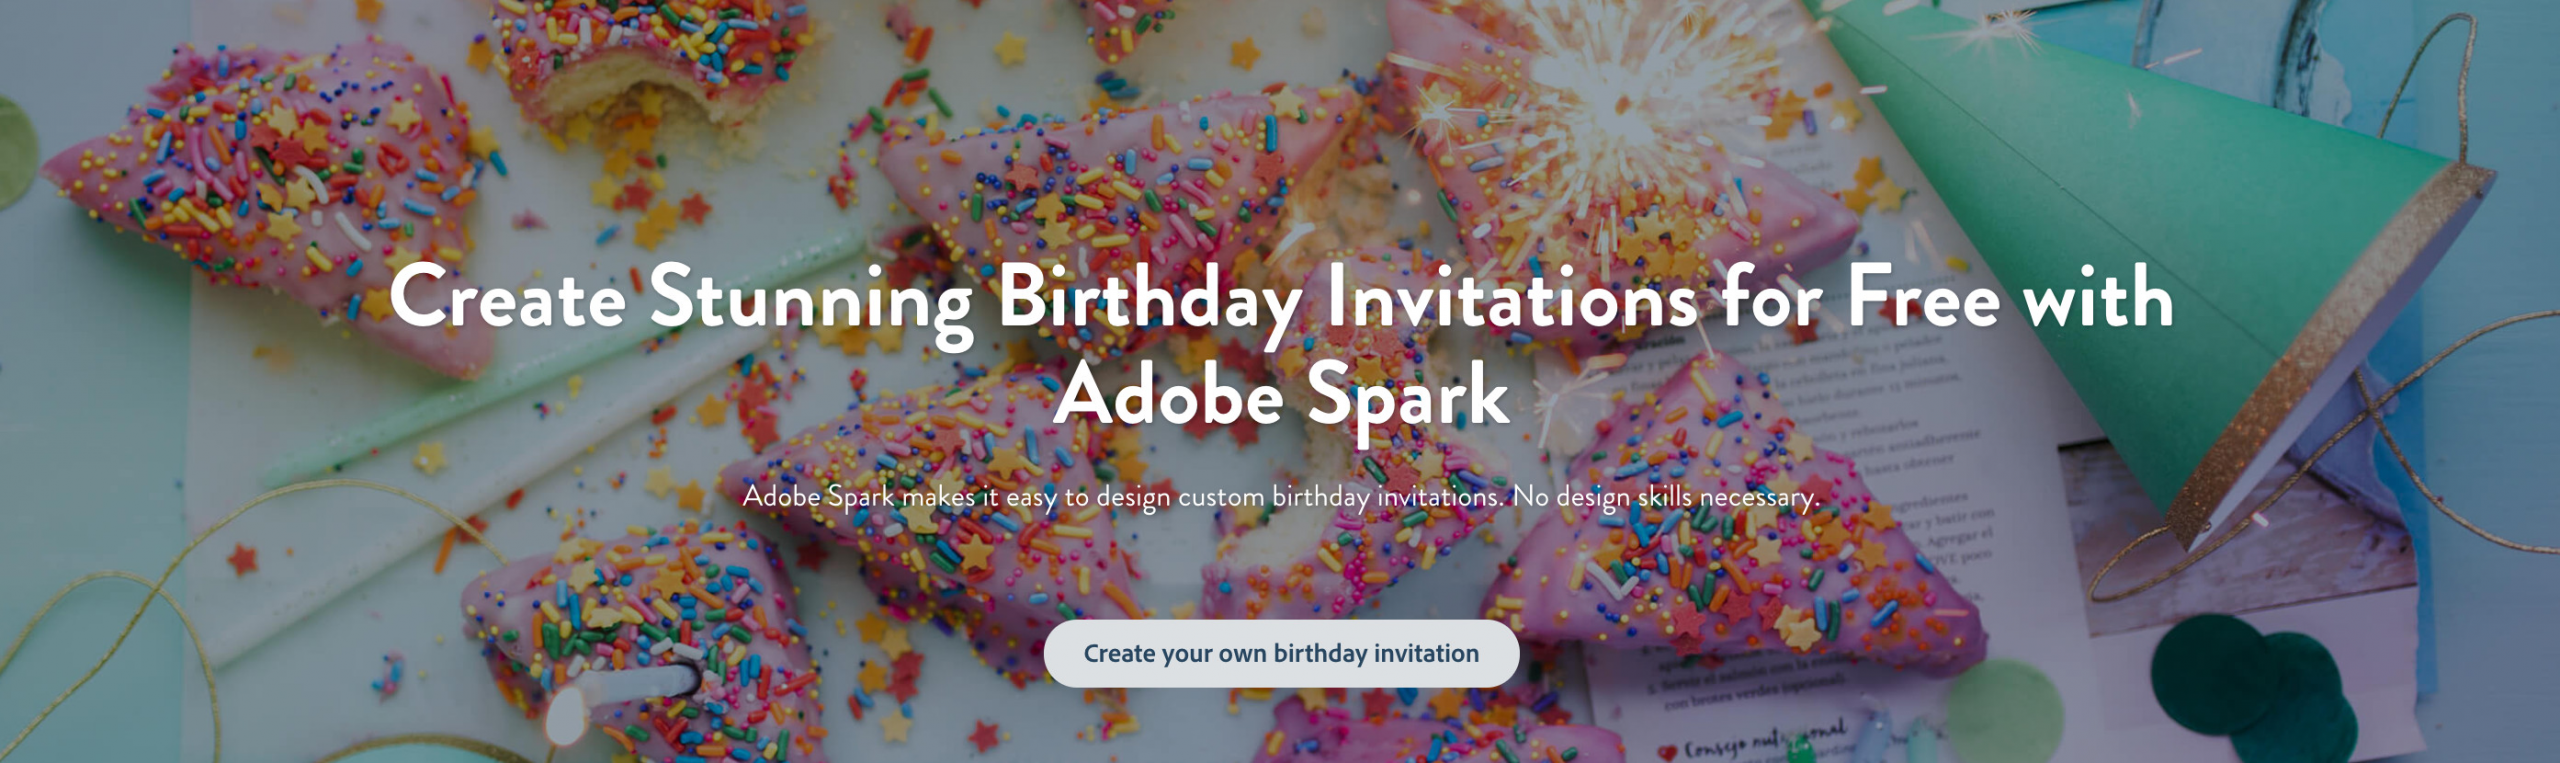 Make Birthday Invitations Online
 Make Your Own Birthday Invitations for Free